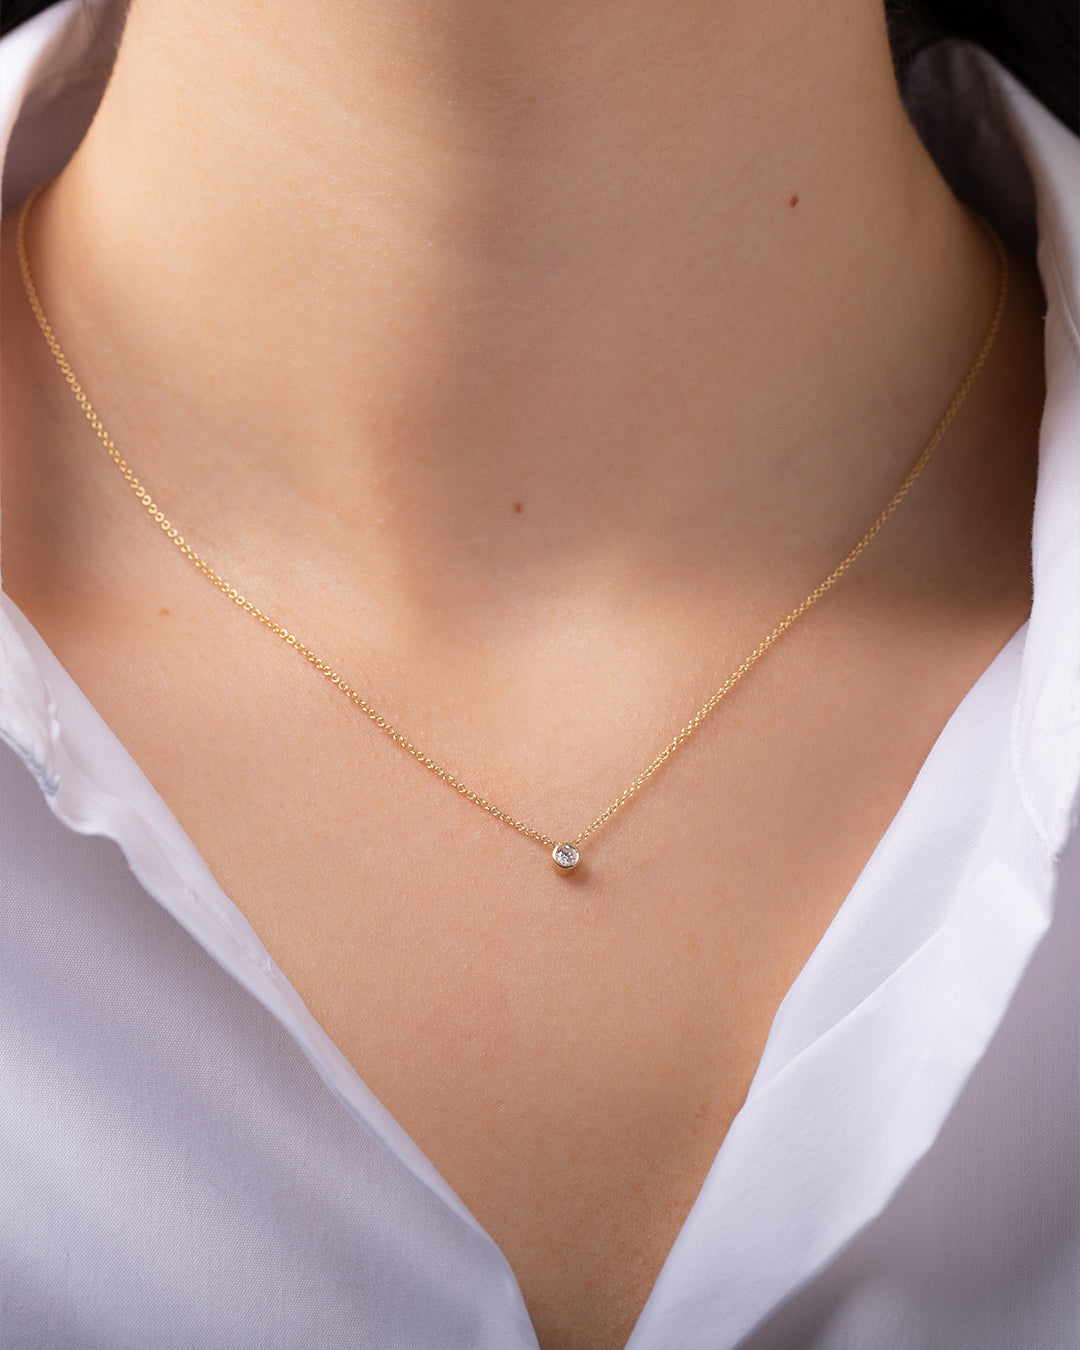 Small Bezel Diamond Necklace